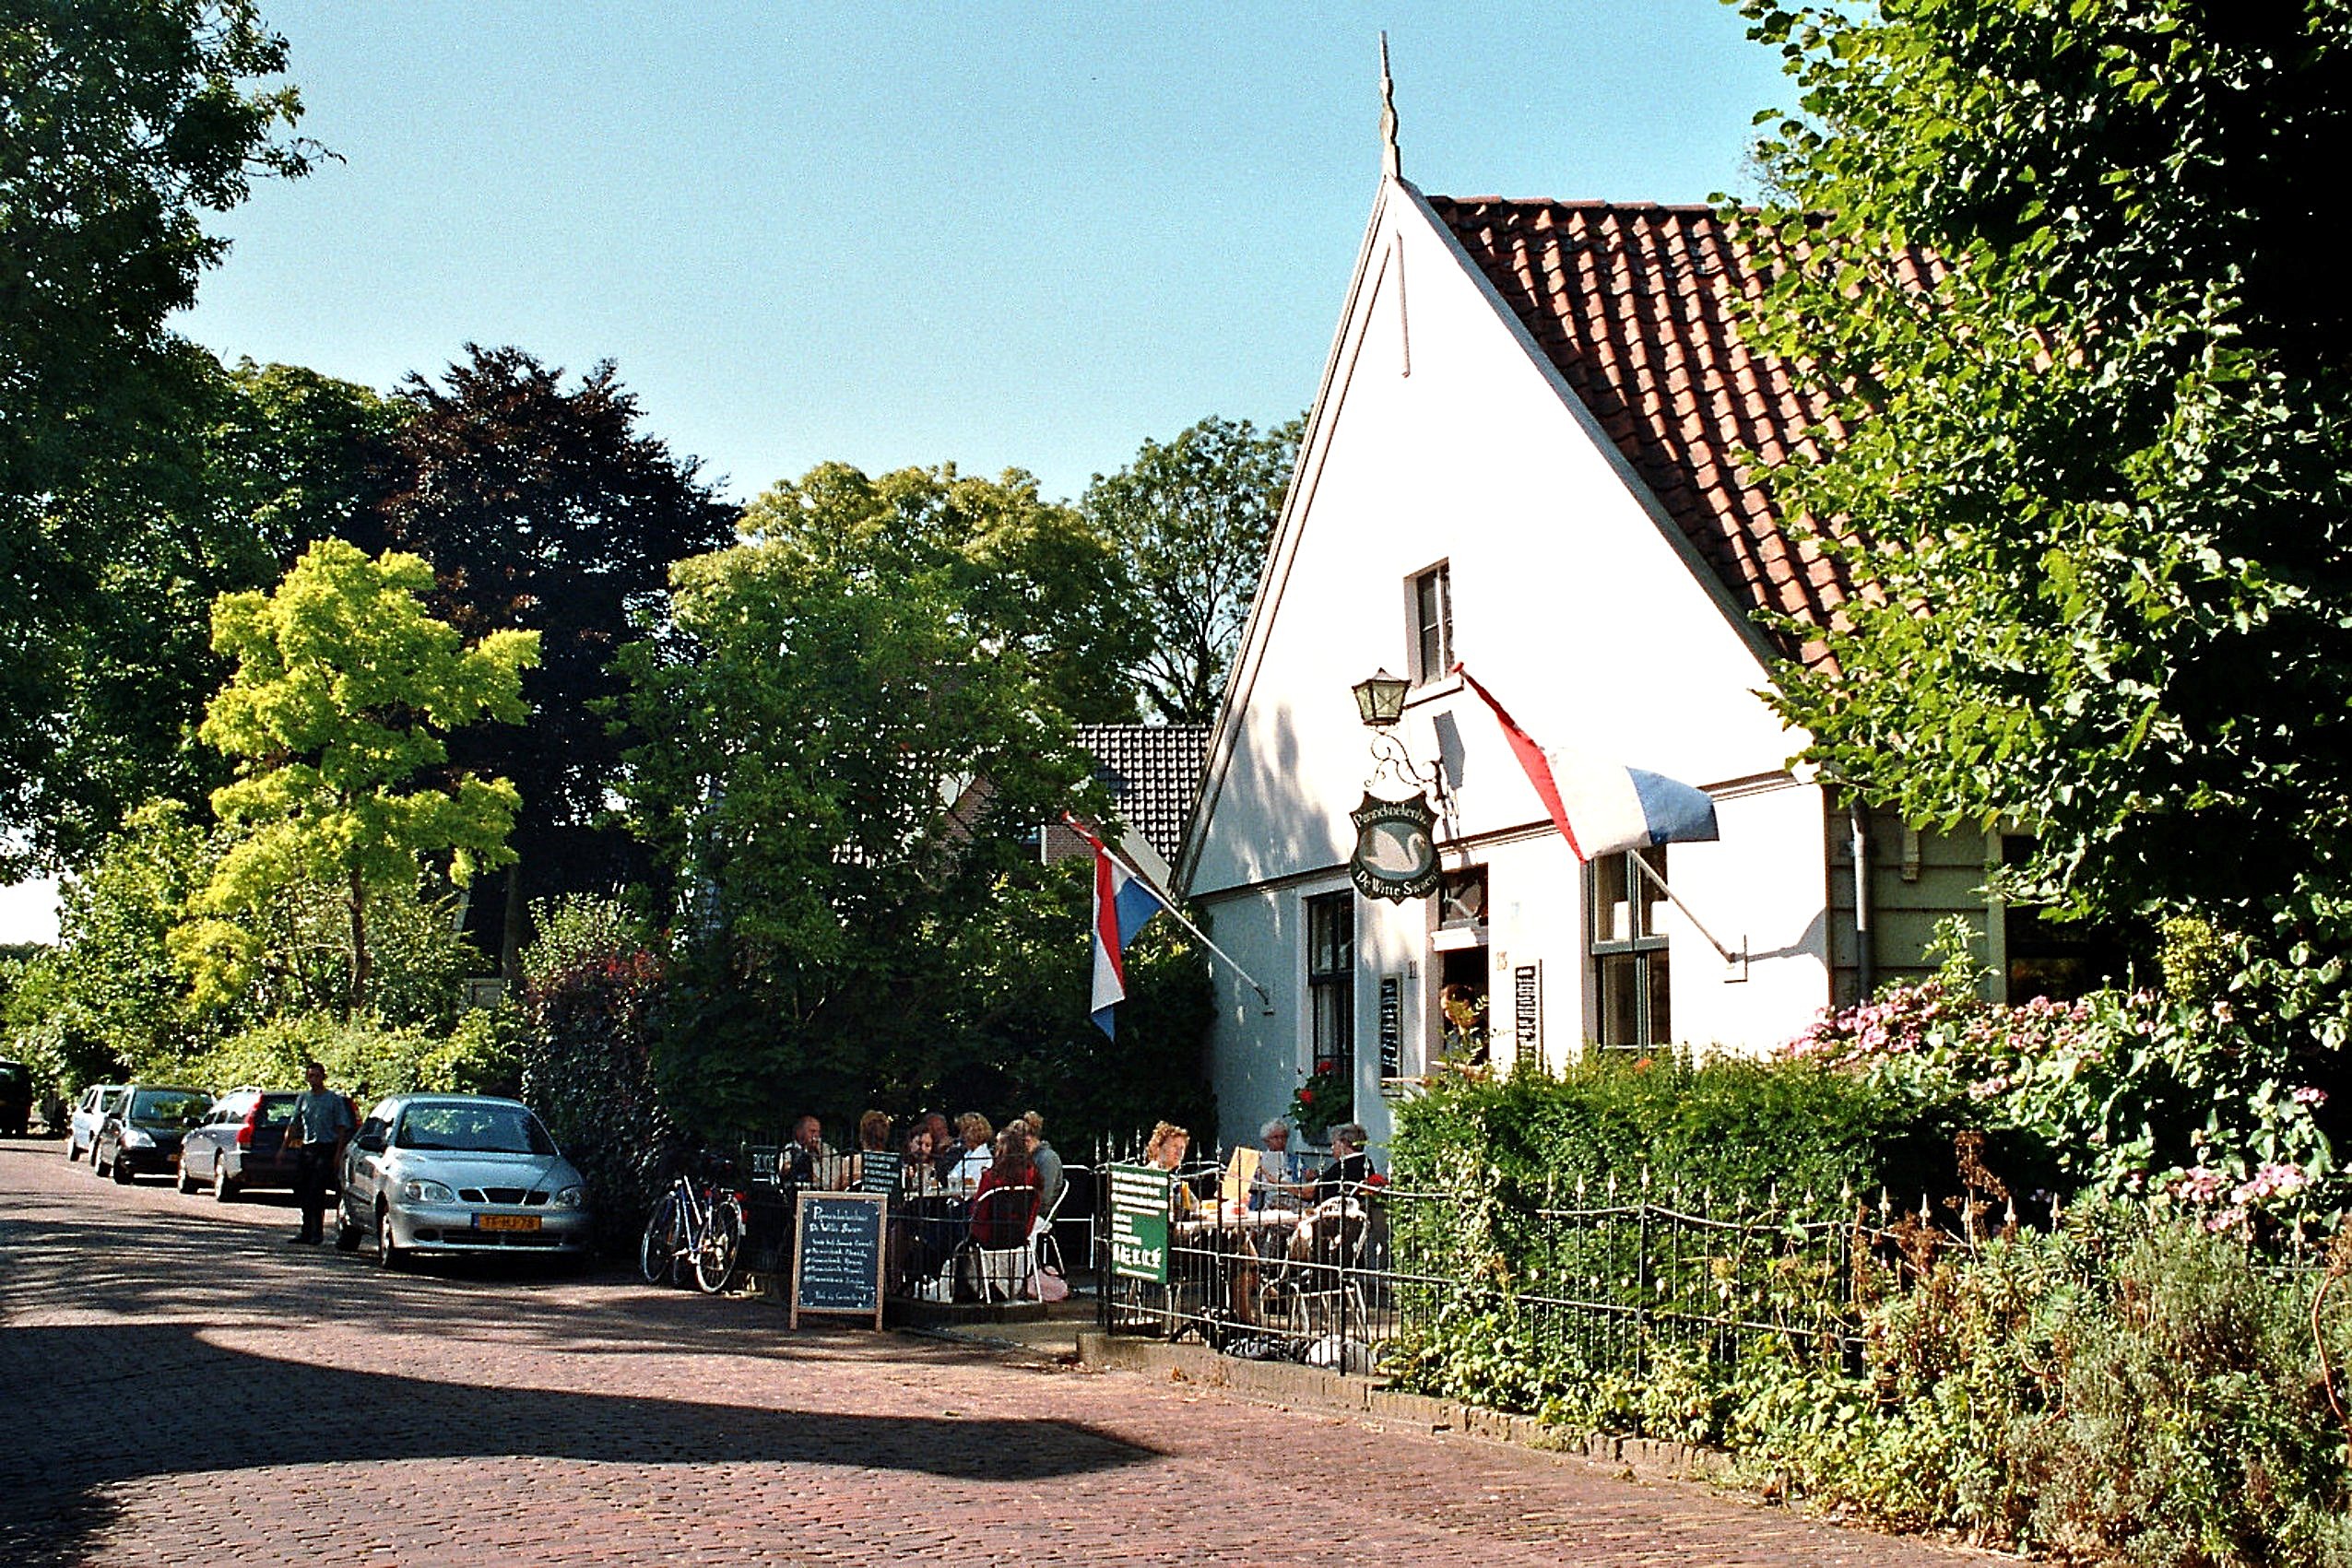 File:Broek in Waterland, the restaurant "De Witte Swaen".jpg - Wikimedia  Commons